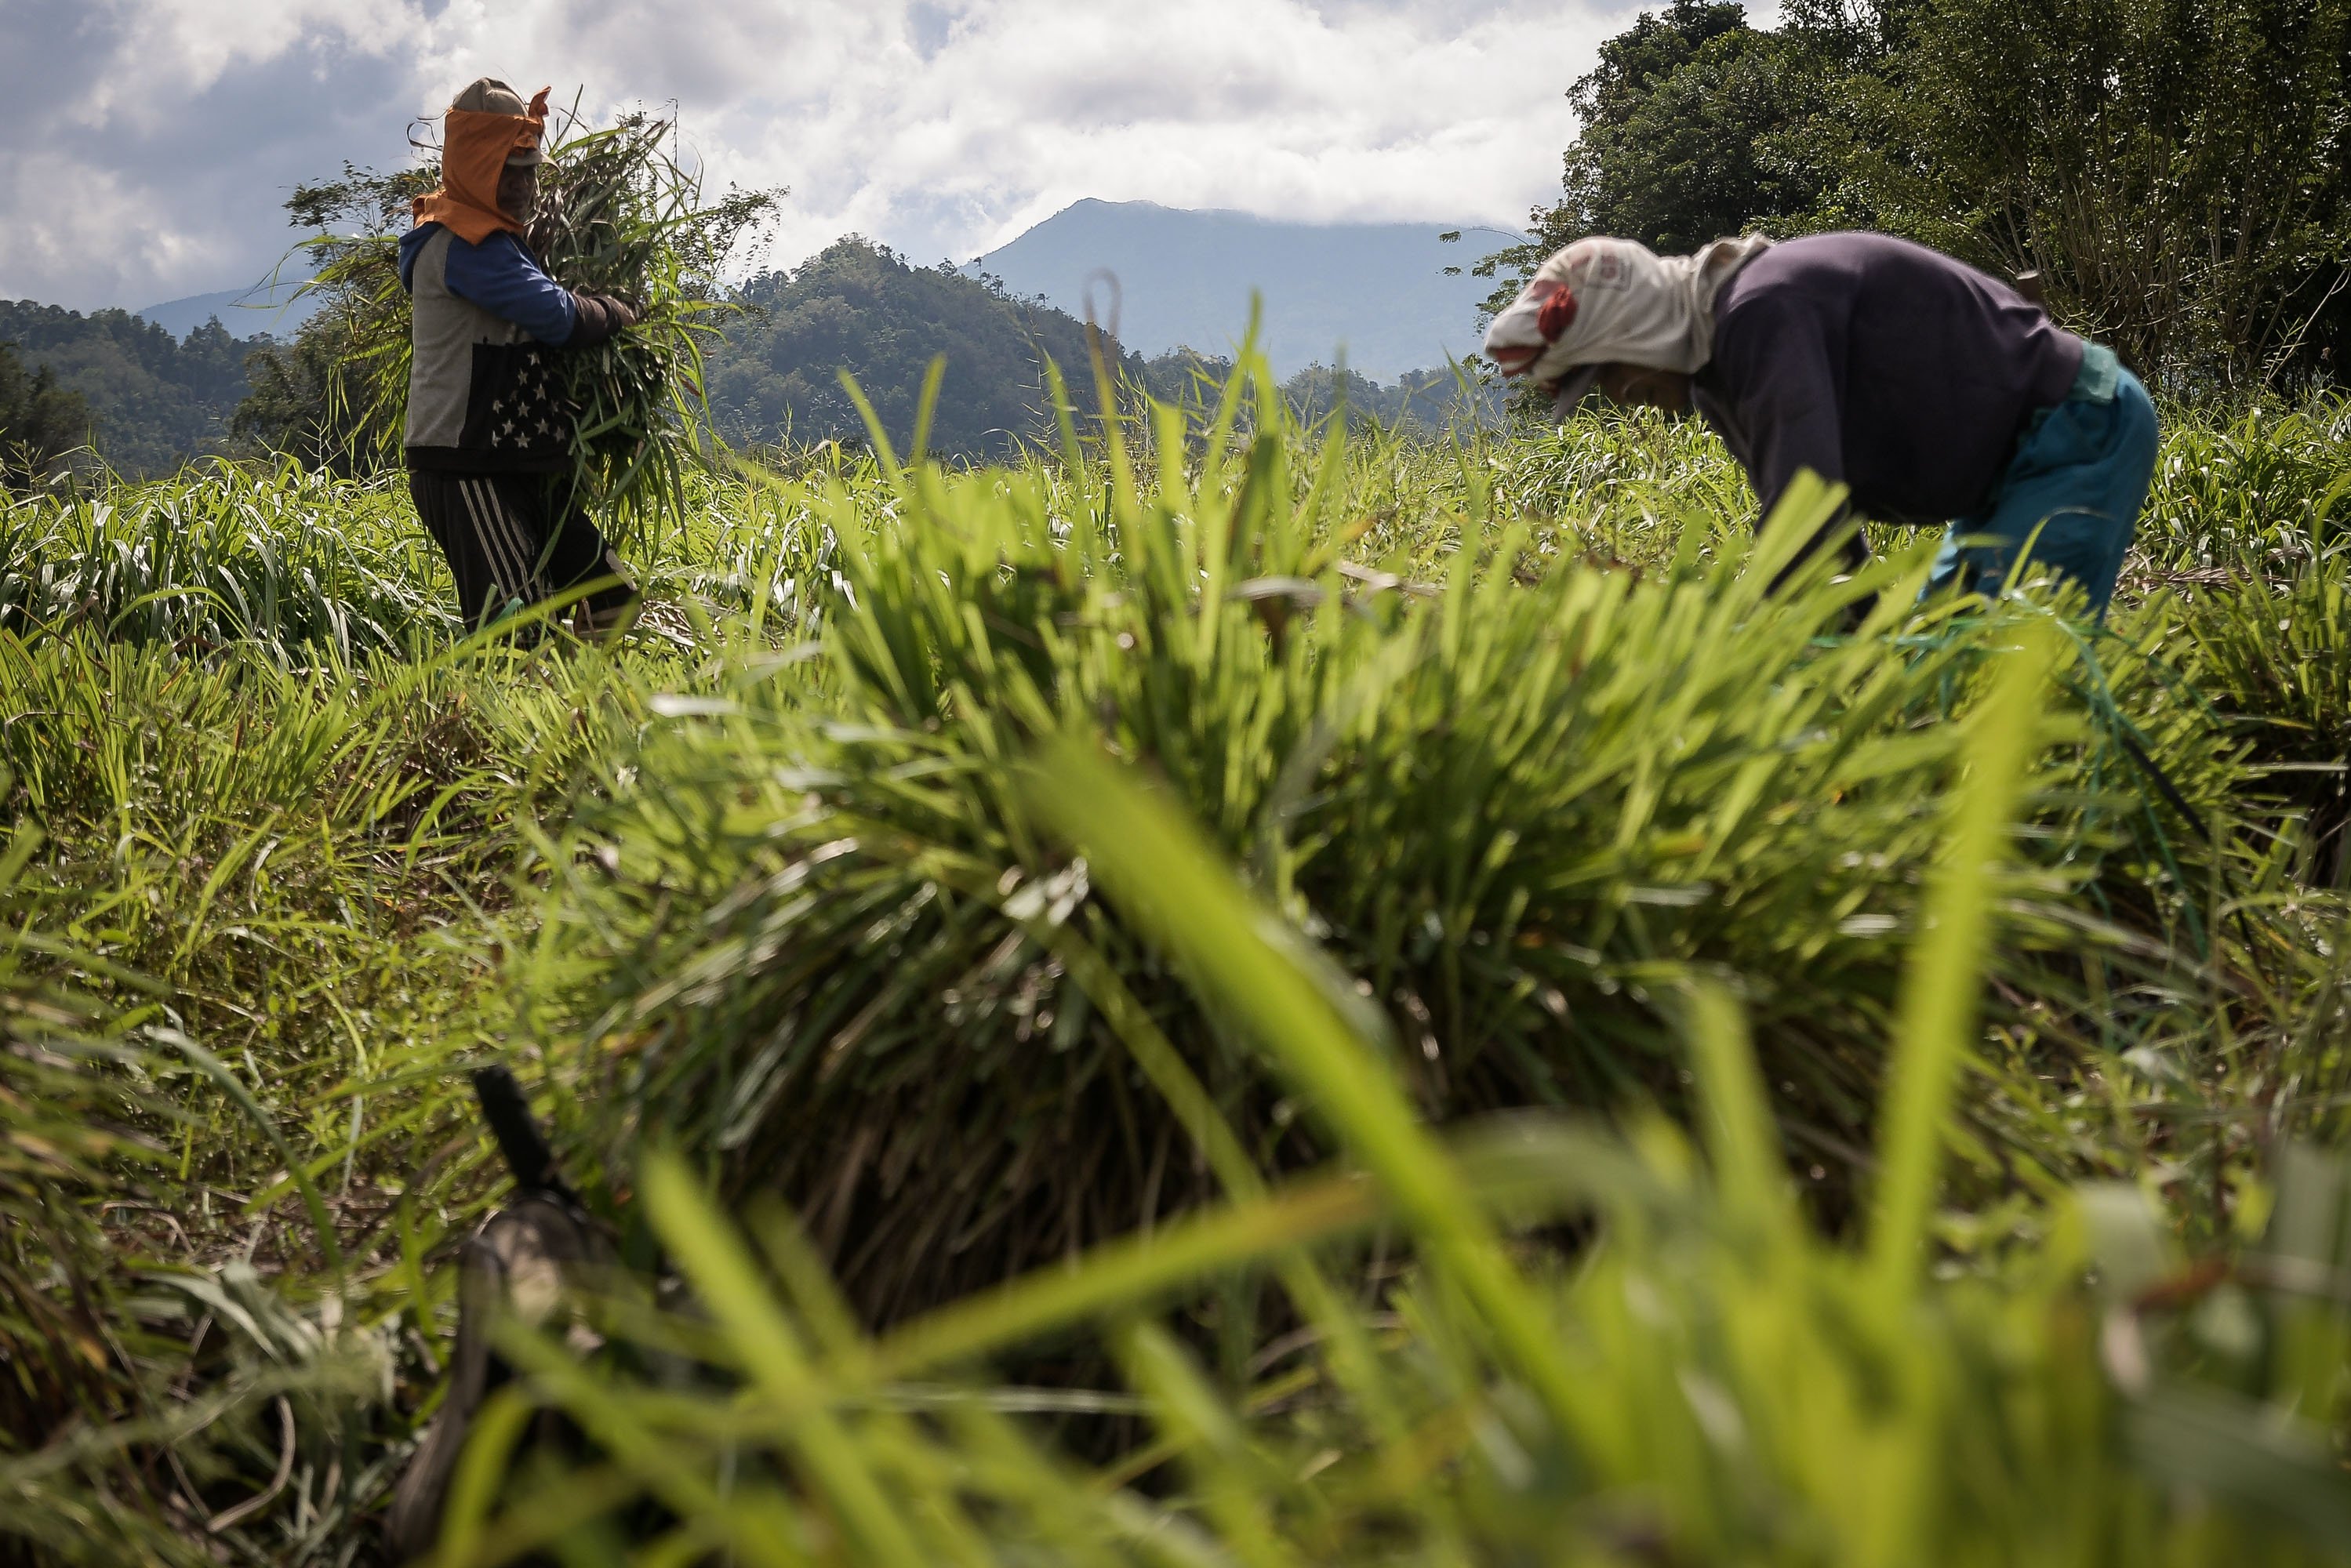 Sejumlah petani memanen tanaman serai wangi yang sudah dipanen di Desa Tountimomor, Kakas Barat, Minahasa, Sulawesi Utara.